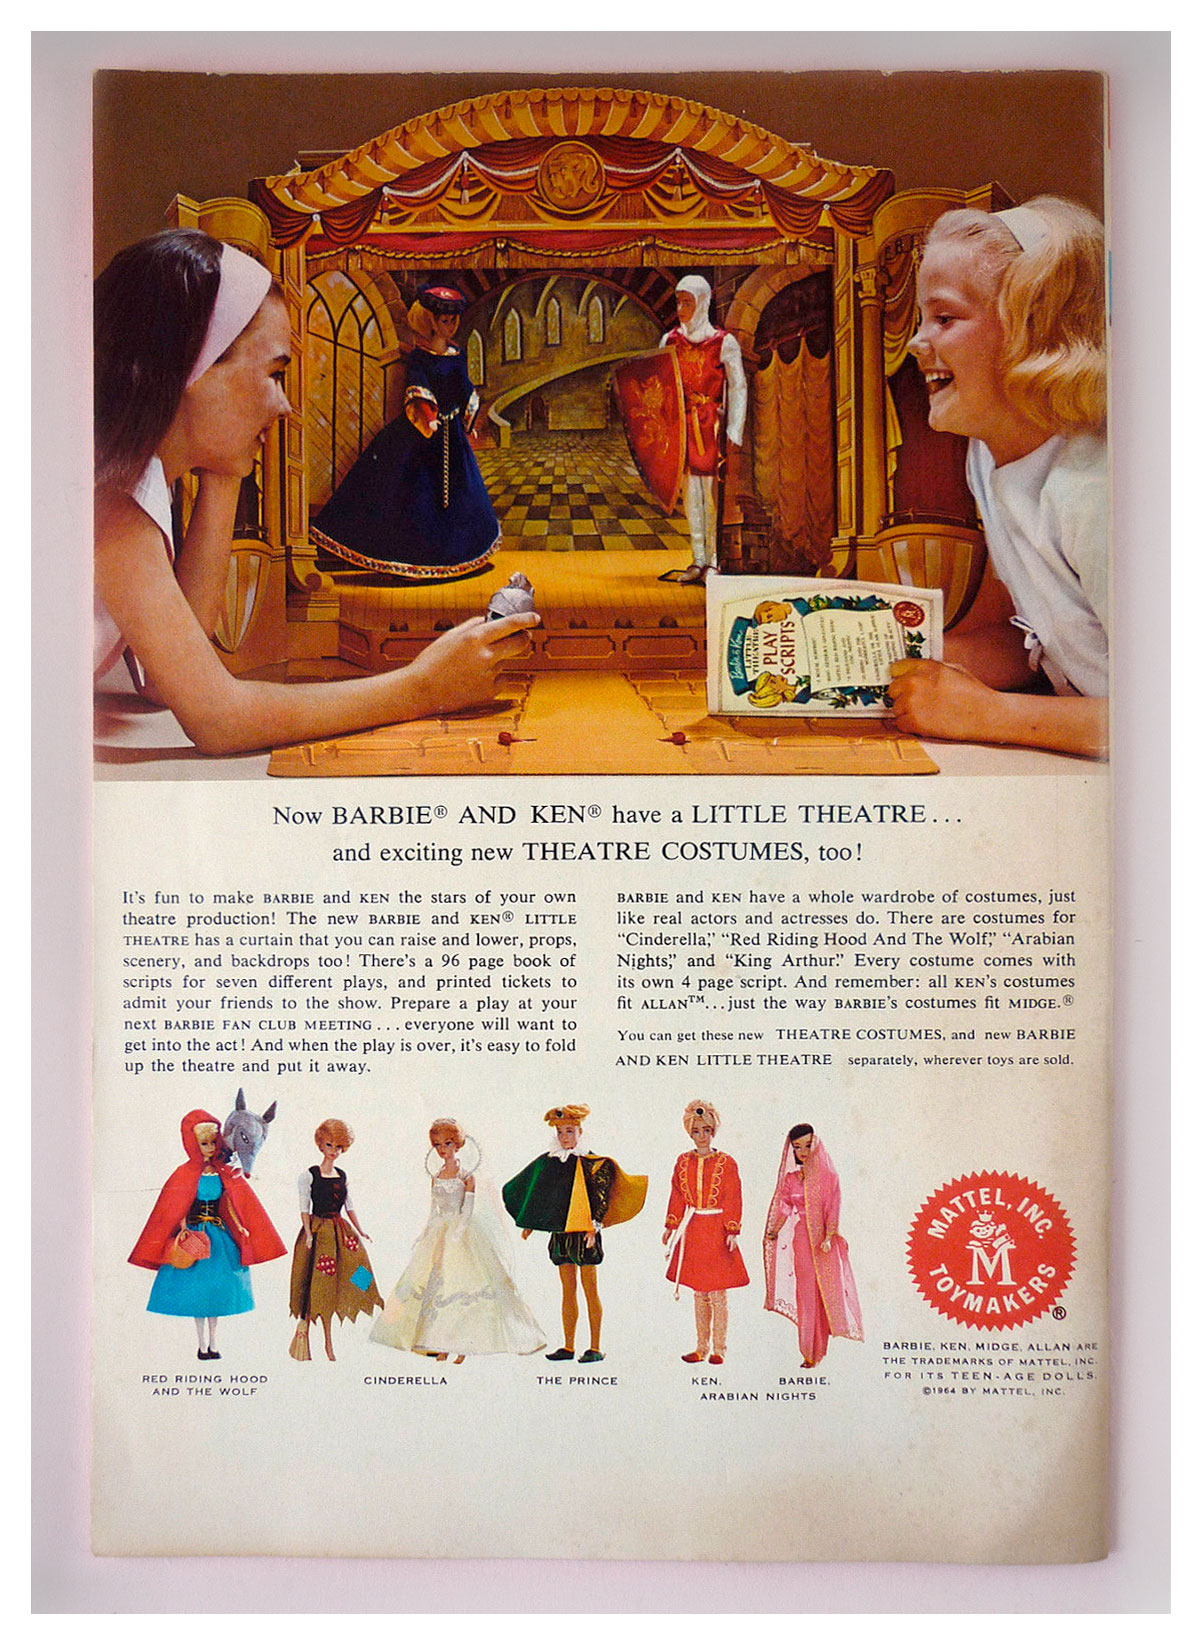 1964 Mattel advertisement from July issue Jack & Jill magazine